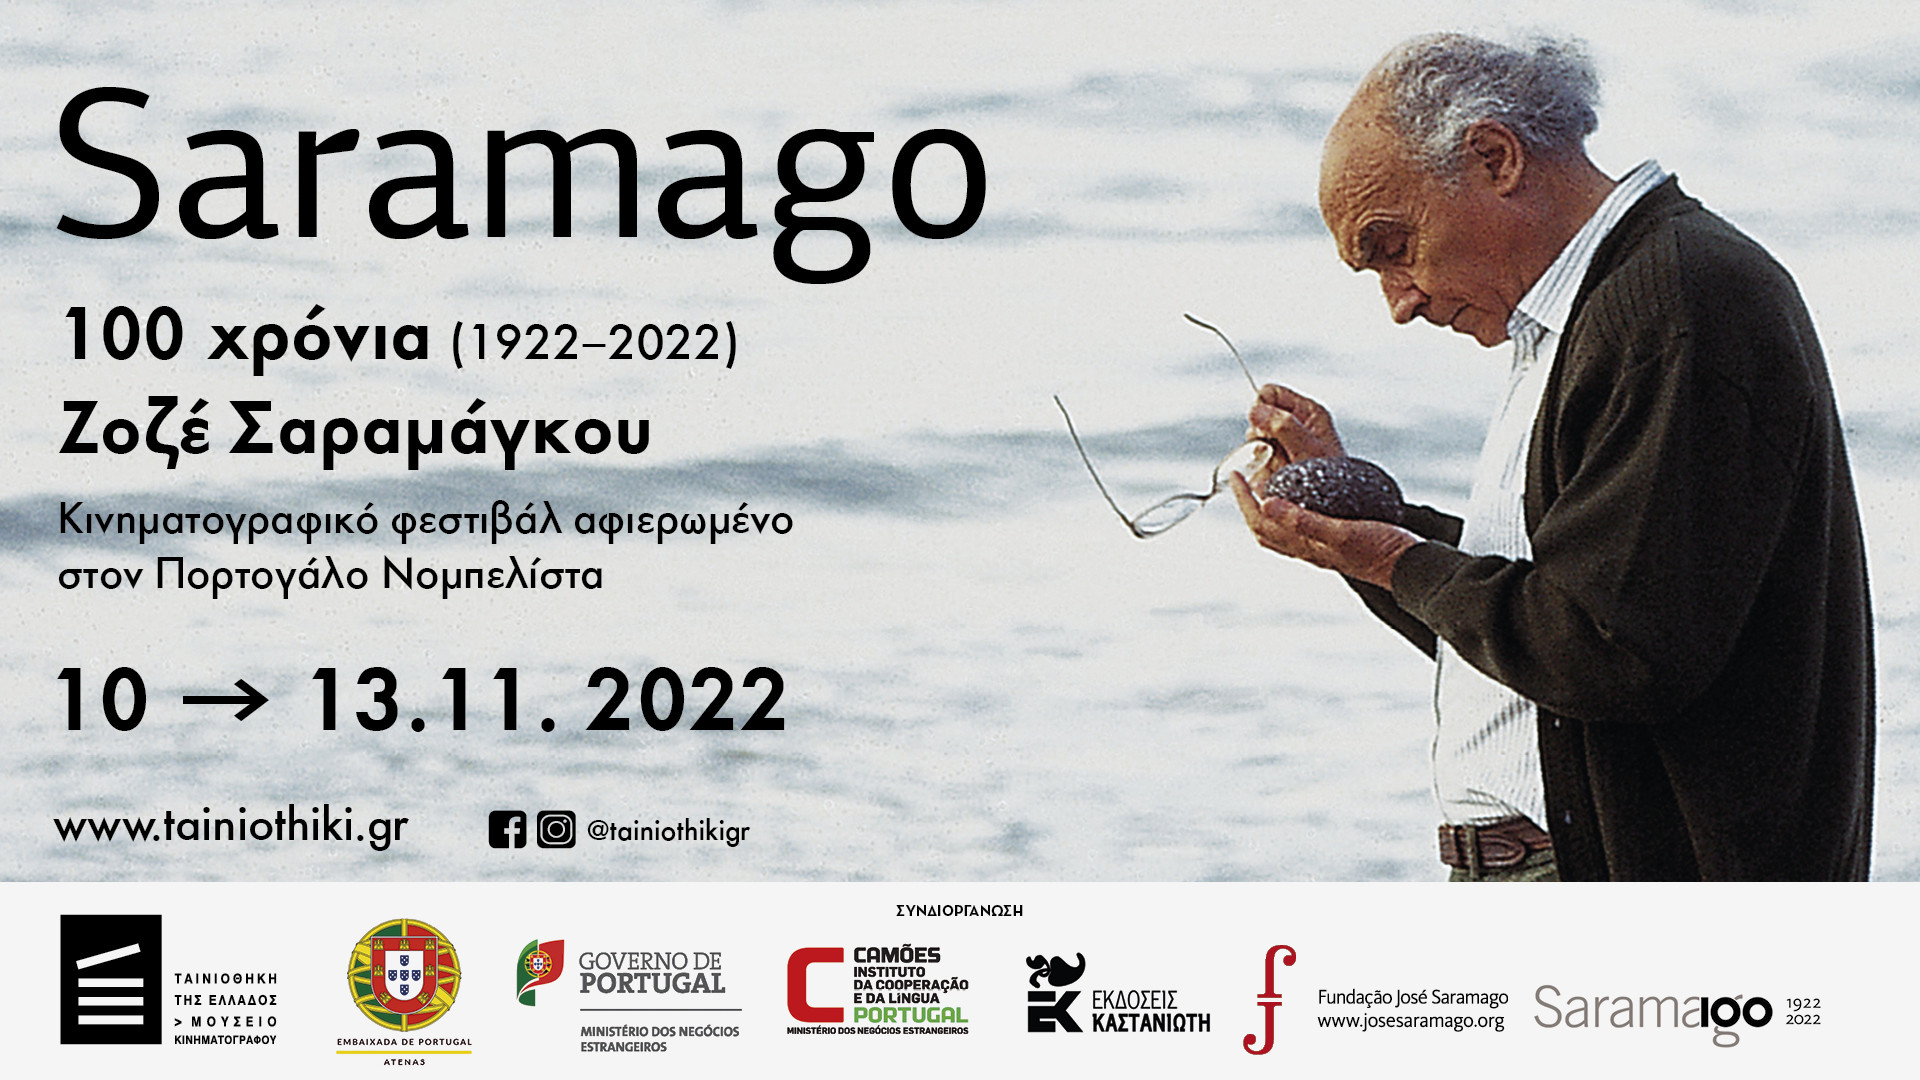 Saramago 100